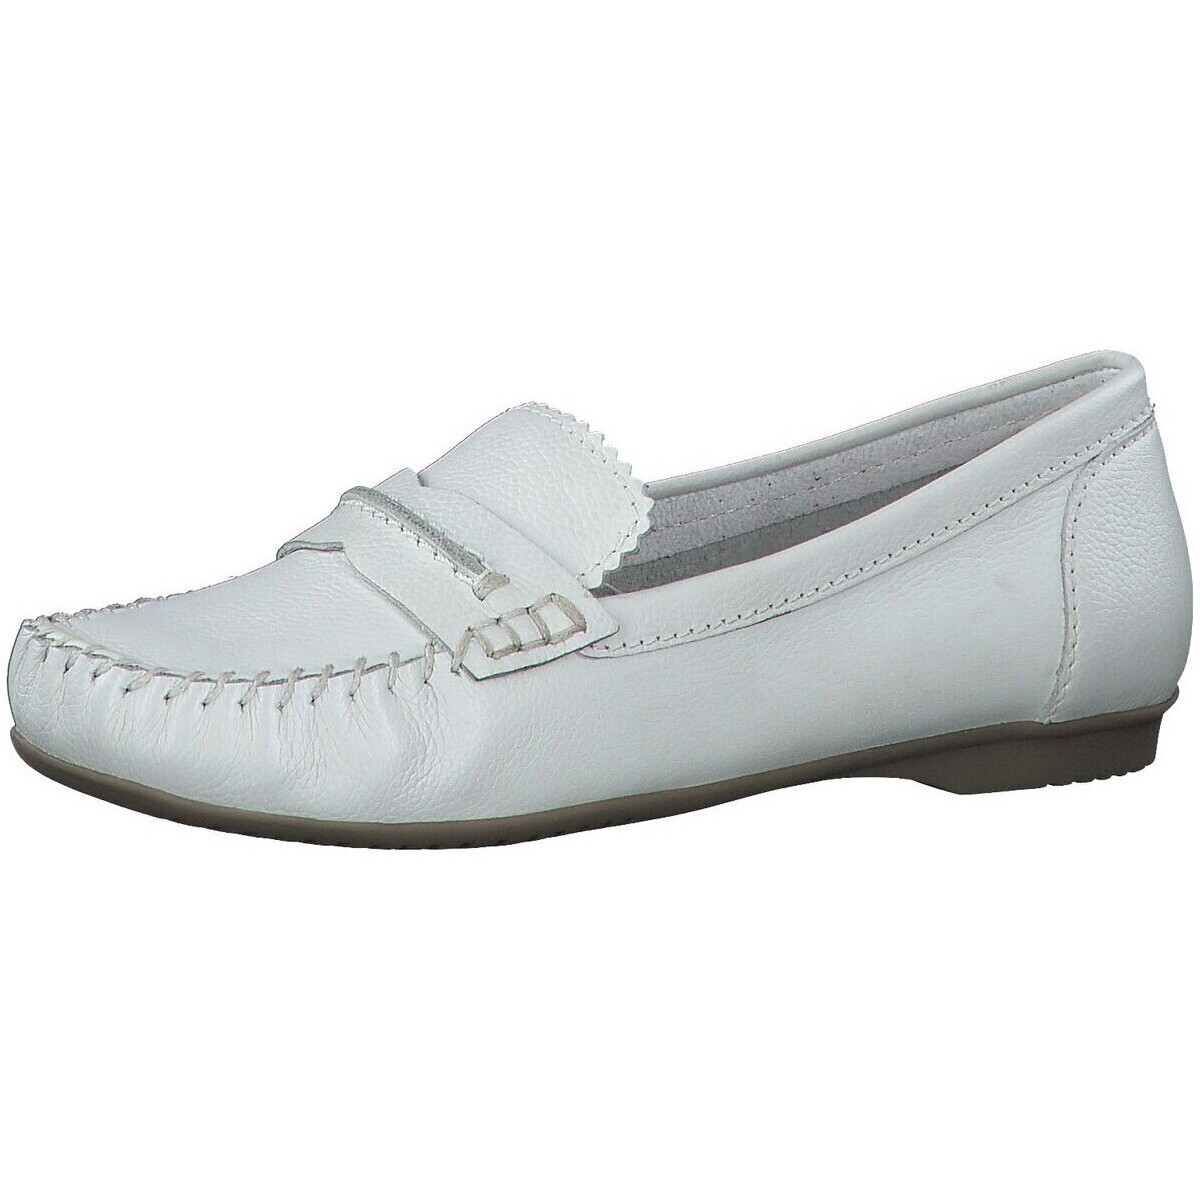 Schuhe Damen Slipper Marco Tozzi Slipper Weiß Mokassin 2-24225-42/100 100 Weiss